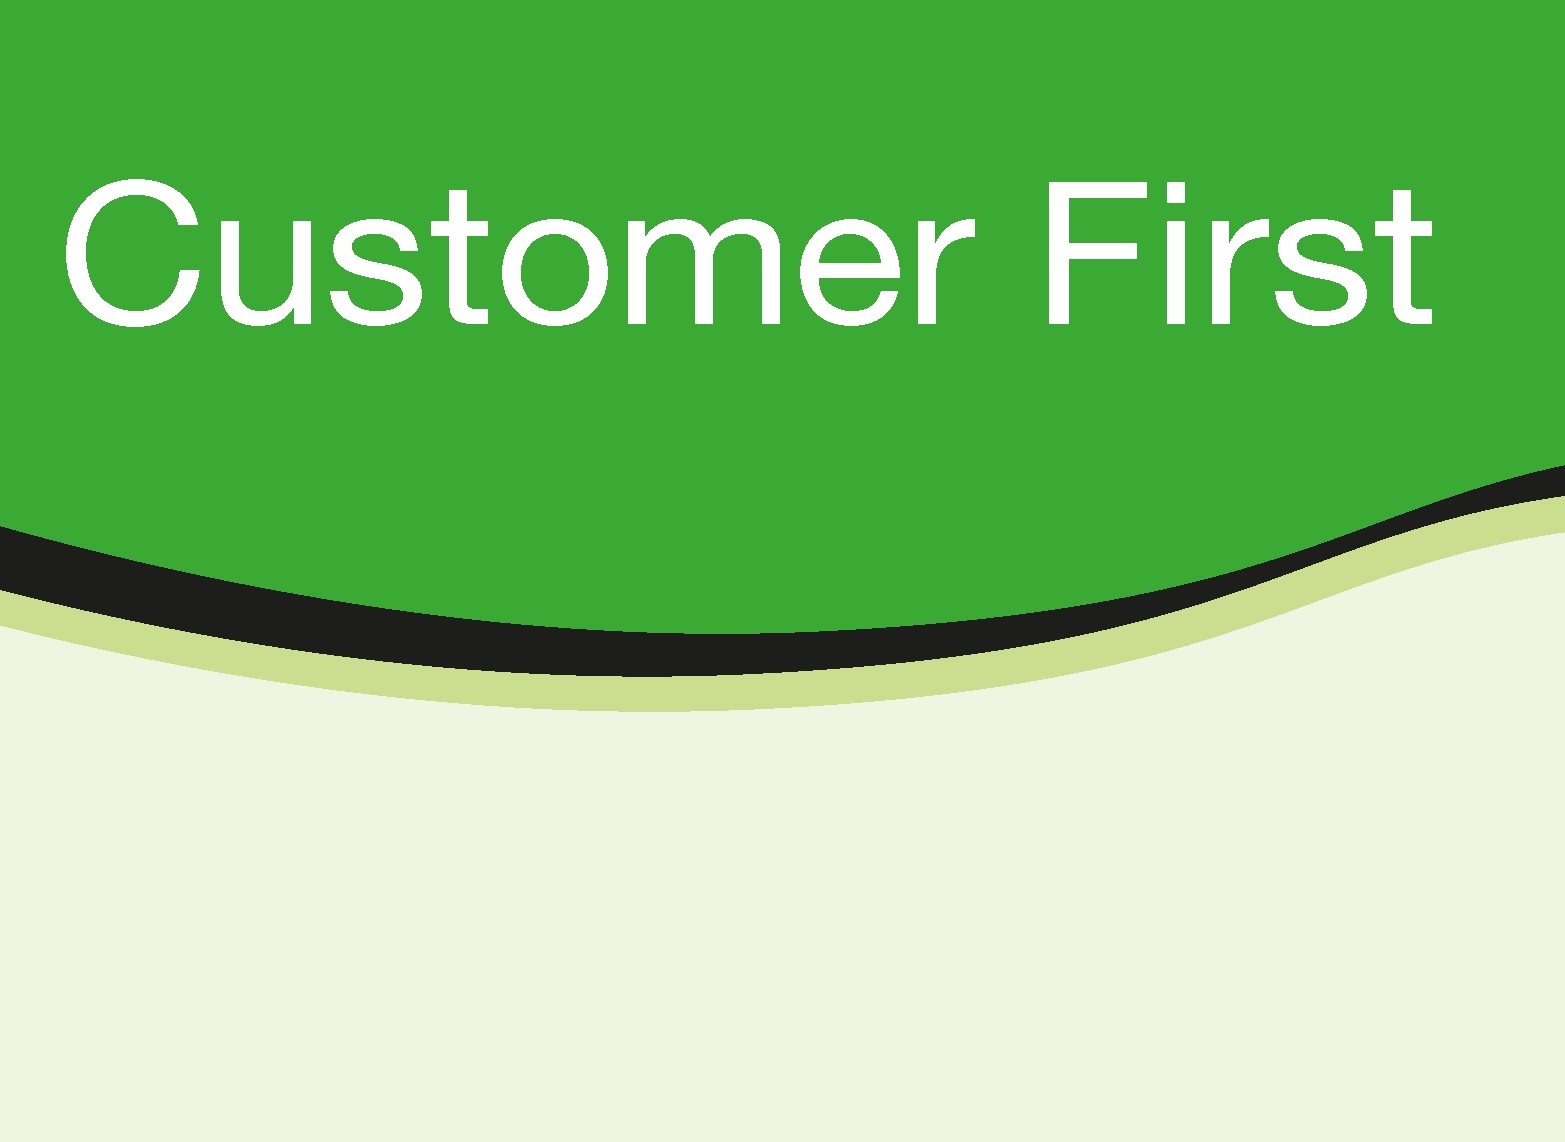 Customer first logo